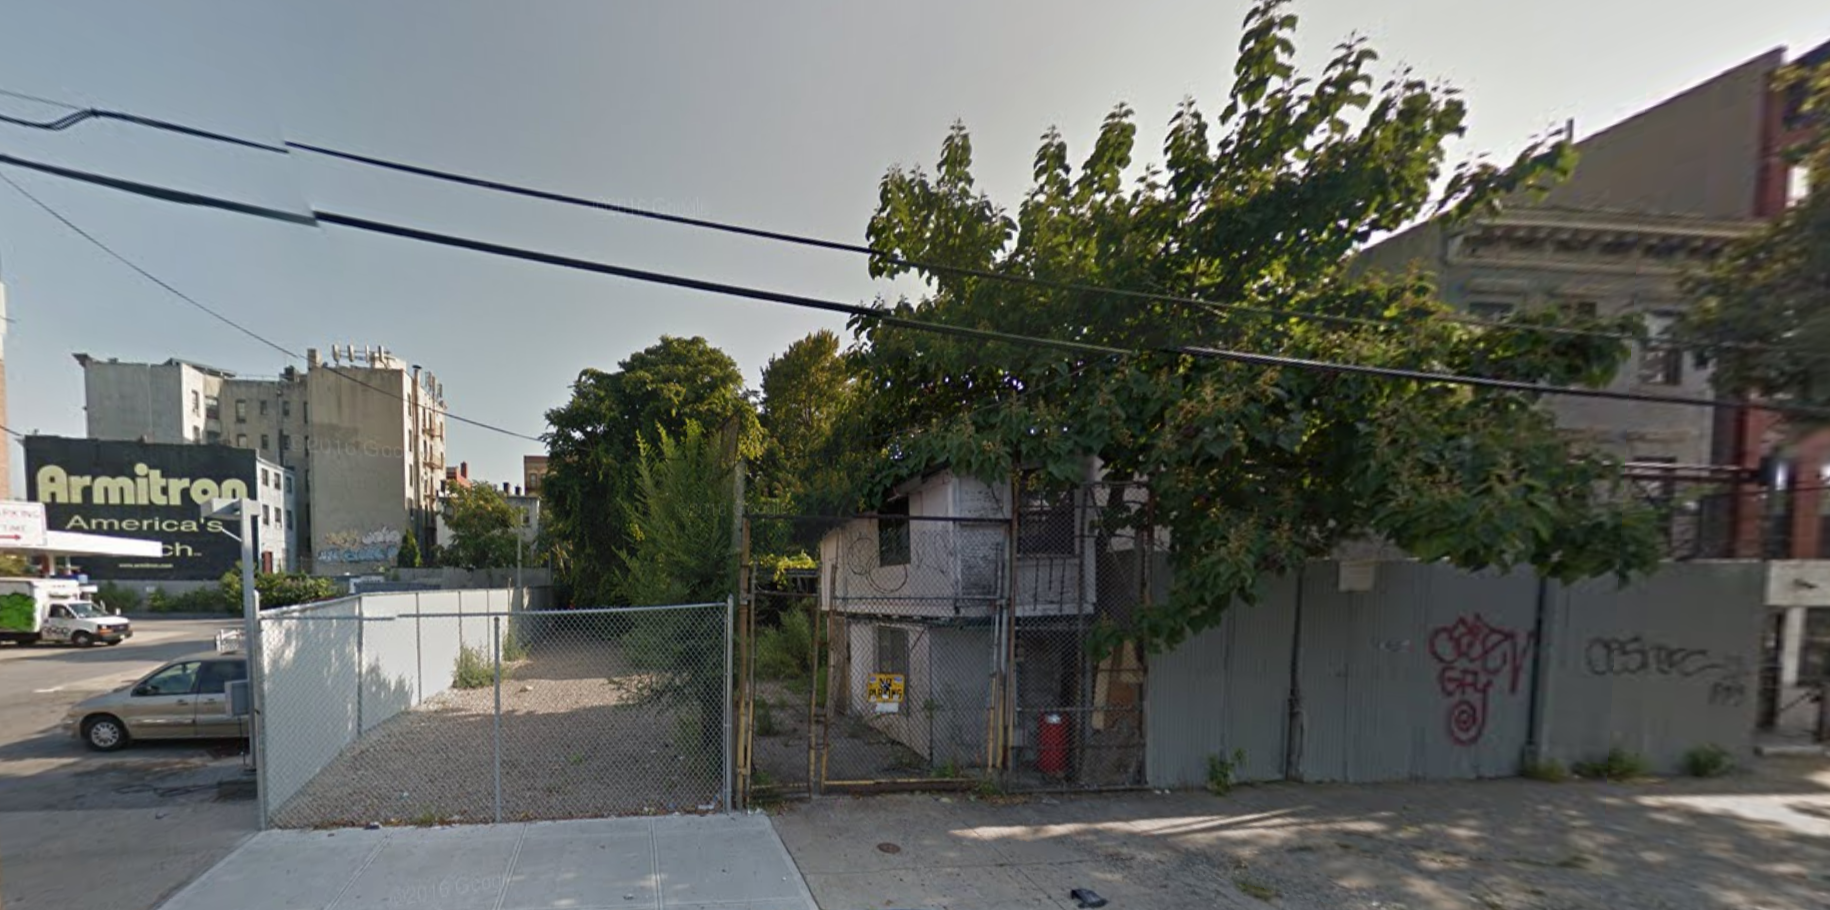 417 East 135th Street in 2014, image via Google Maps